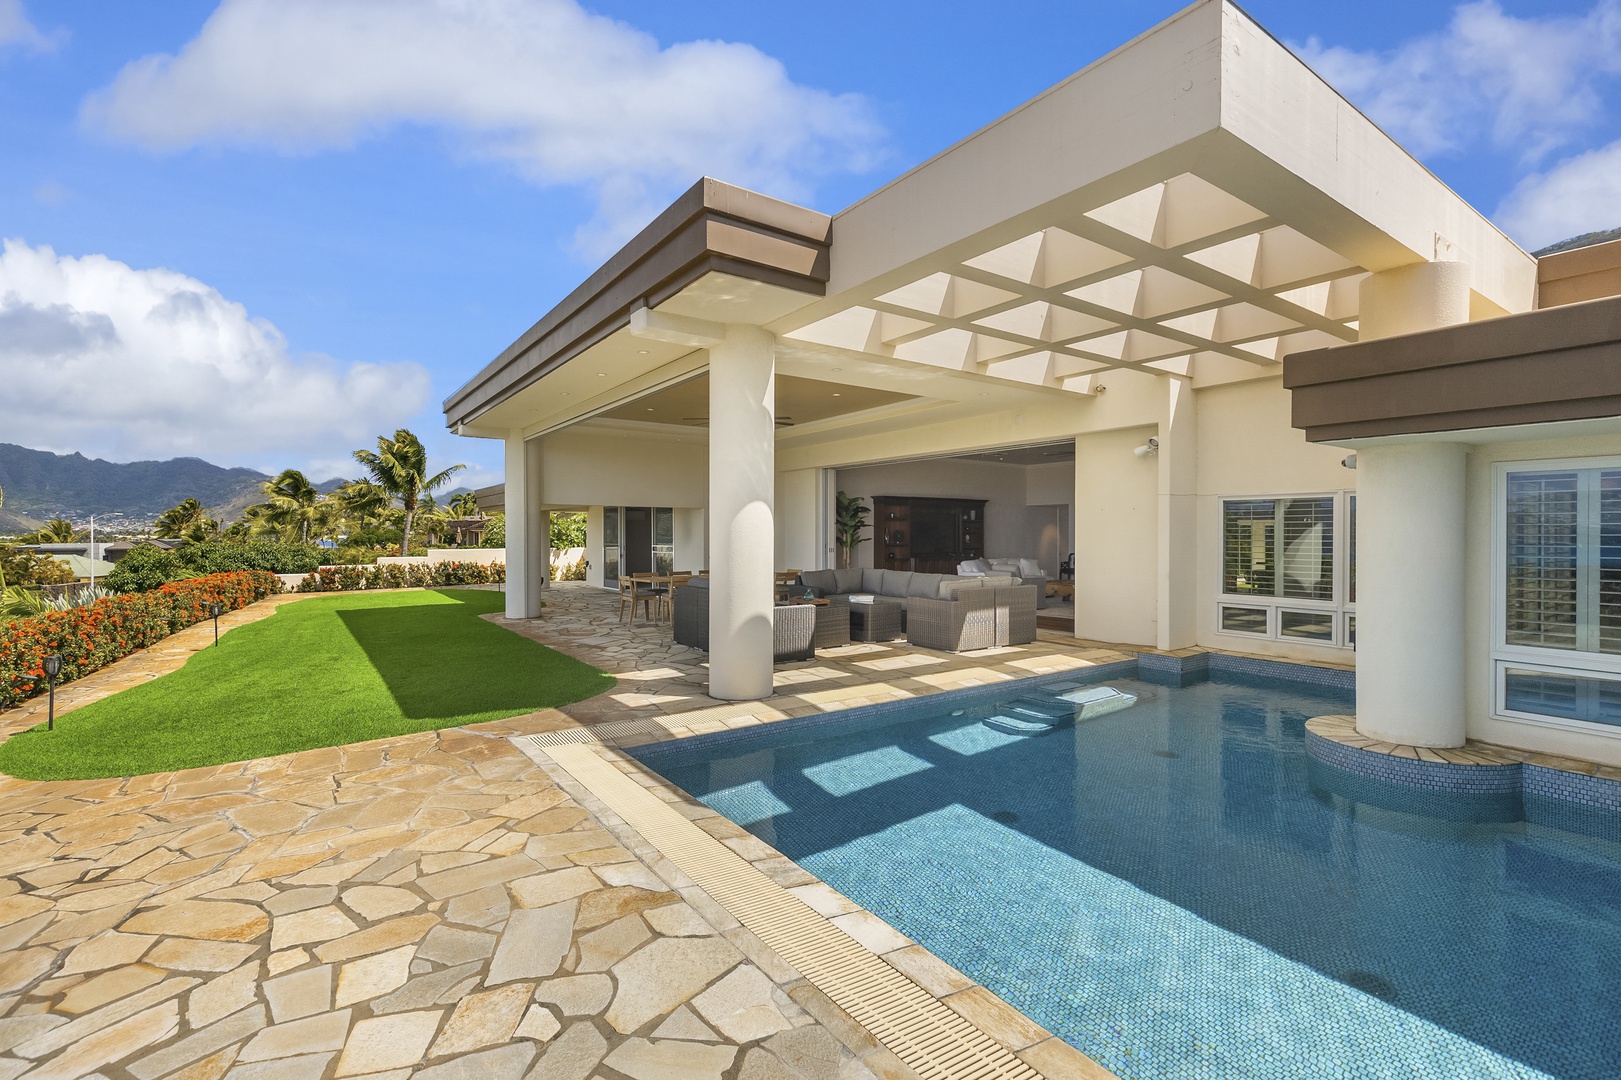 Honolulu Vacation Rentals, Hale Makana - Enjoy the private pool!